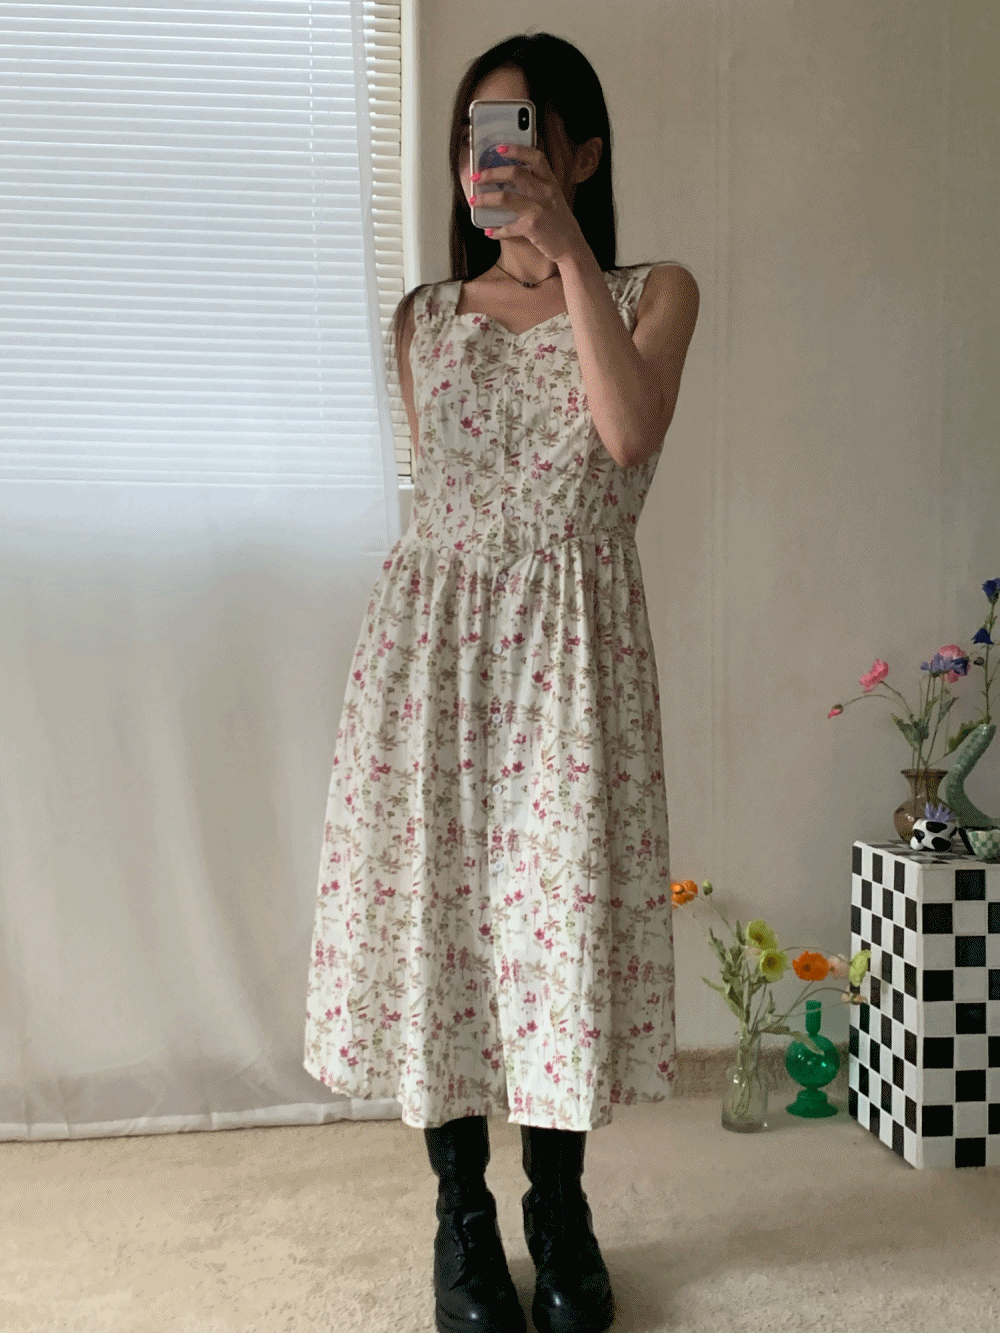 [Dress] Clemence butter slip dress / 2 colors